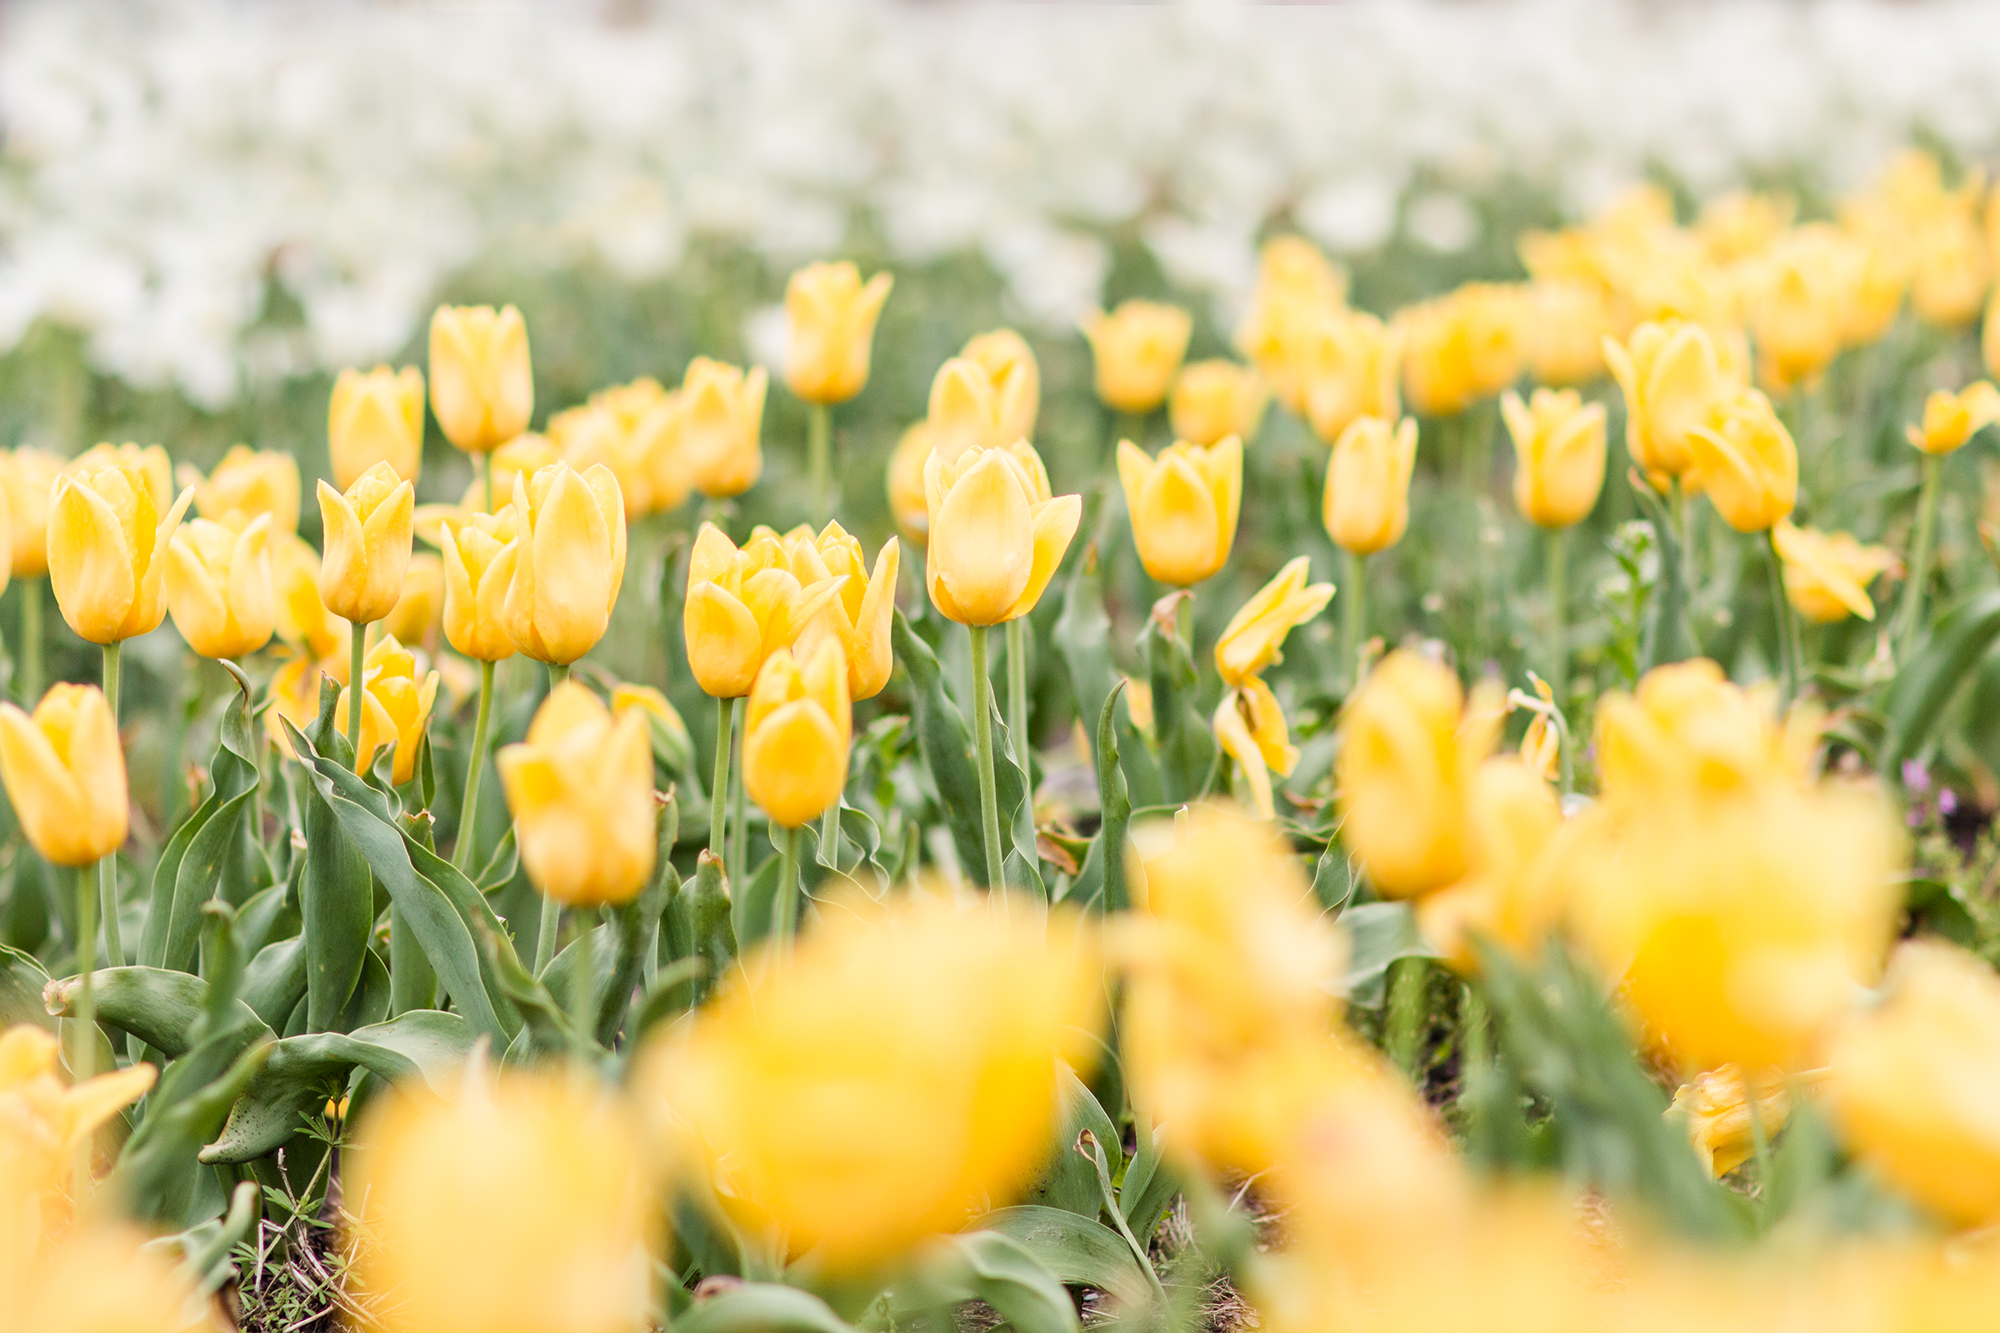 Yellow and White Tulips, Holland Michigan | Hayley Moore Photography | Fort Wayne, Indiana Photographer | www.hayleymoore.com